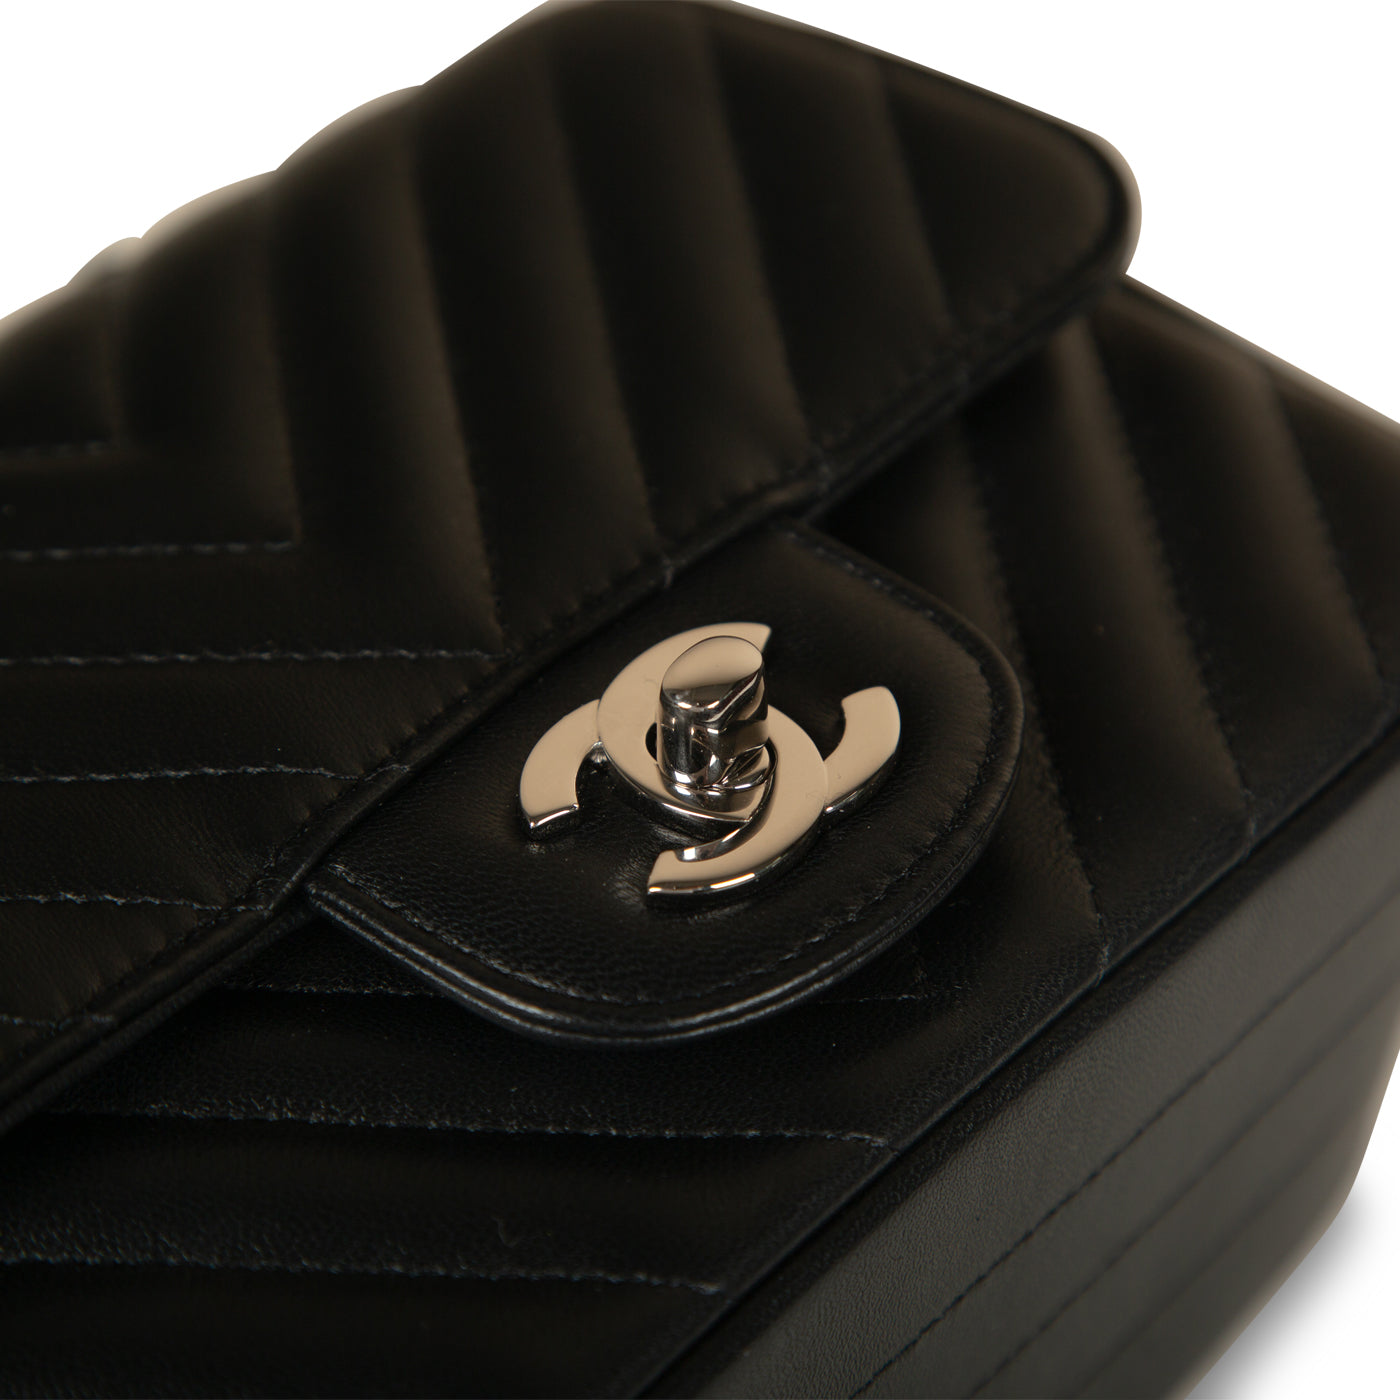 Chanel Macro Flap Bag Chevron Caviar Small Blue 21663316